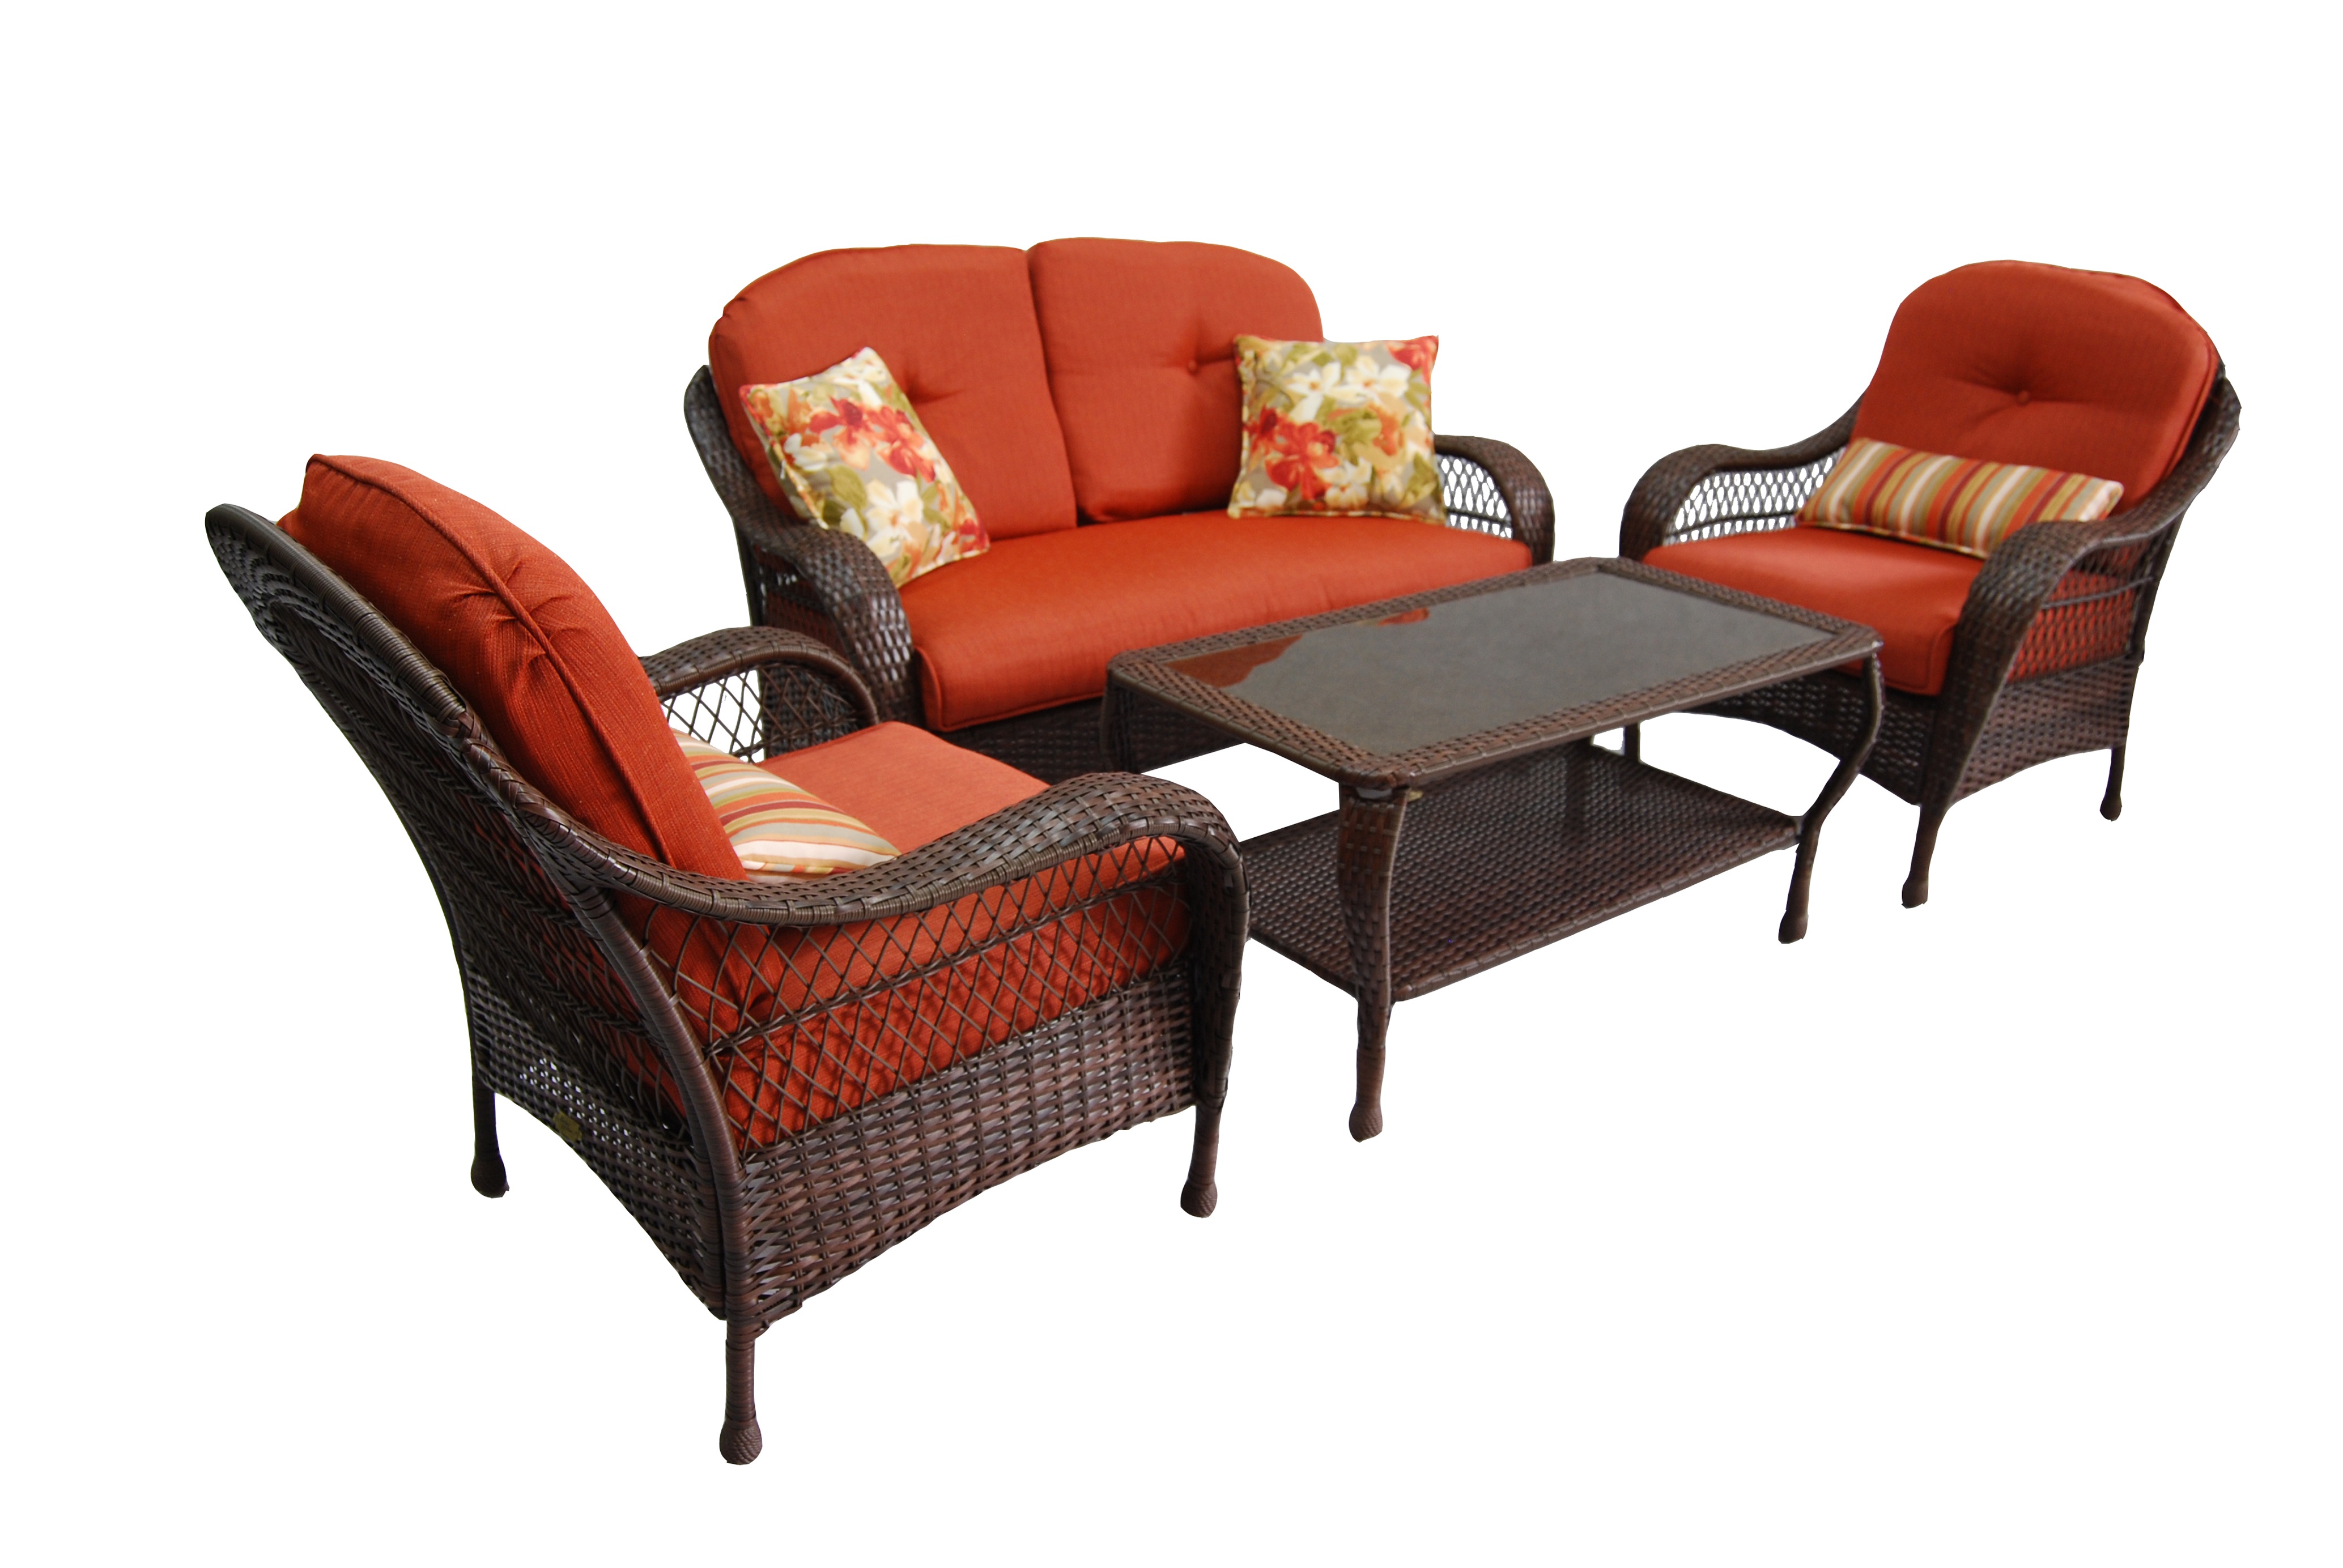 Better Homes & Gardens Azalea Ridge Outdoor Conversation Set with Orange Cushions - image 1 of 13